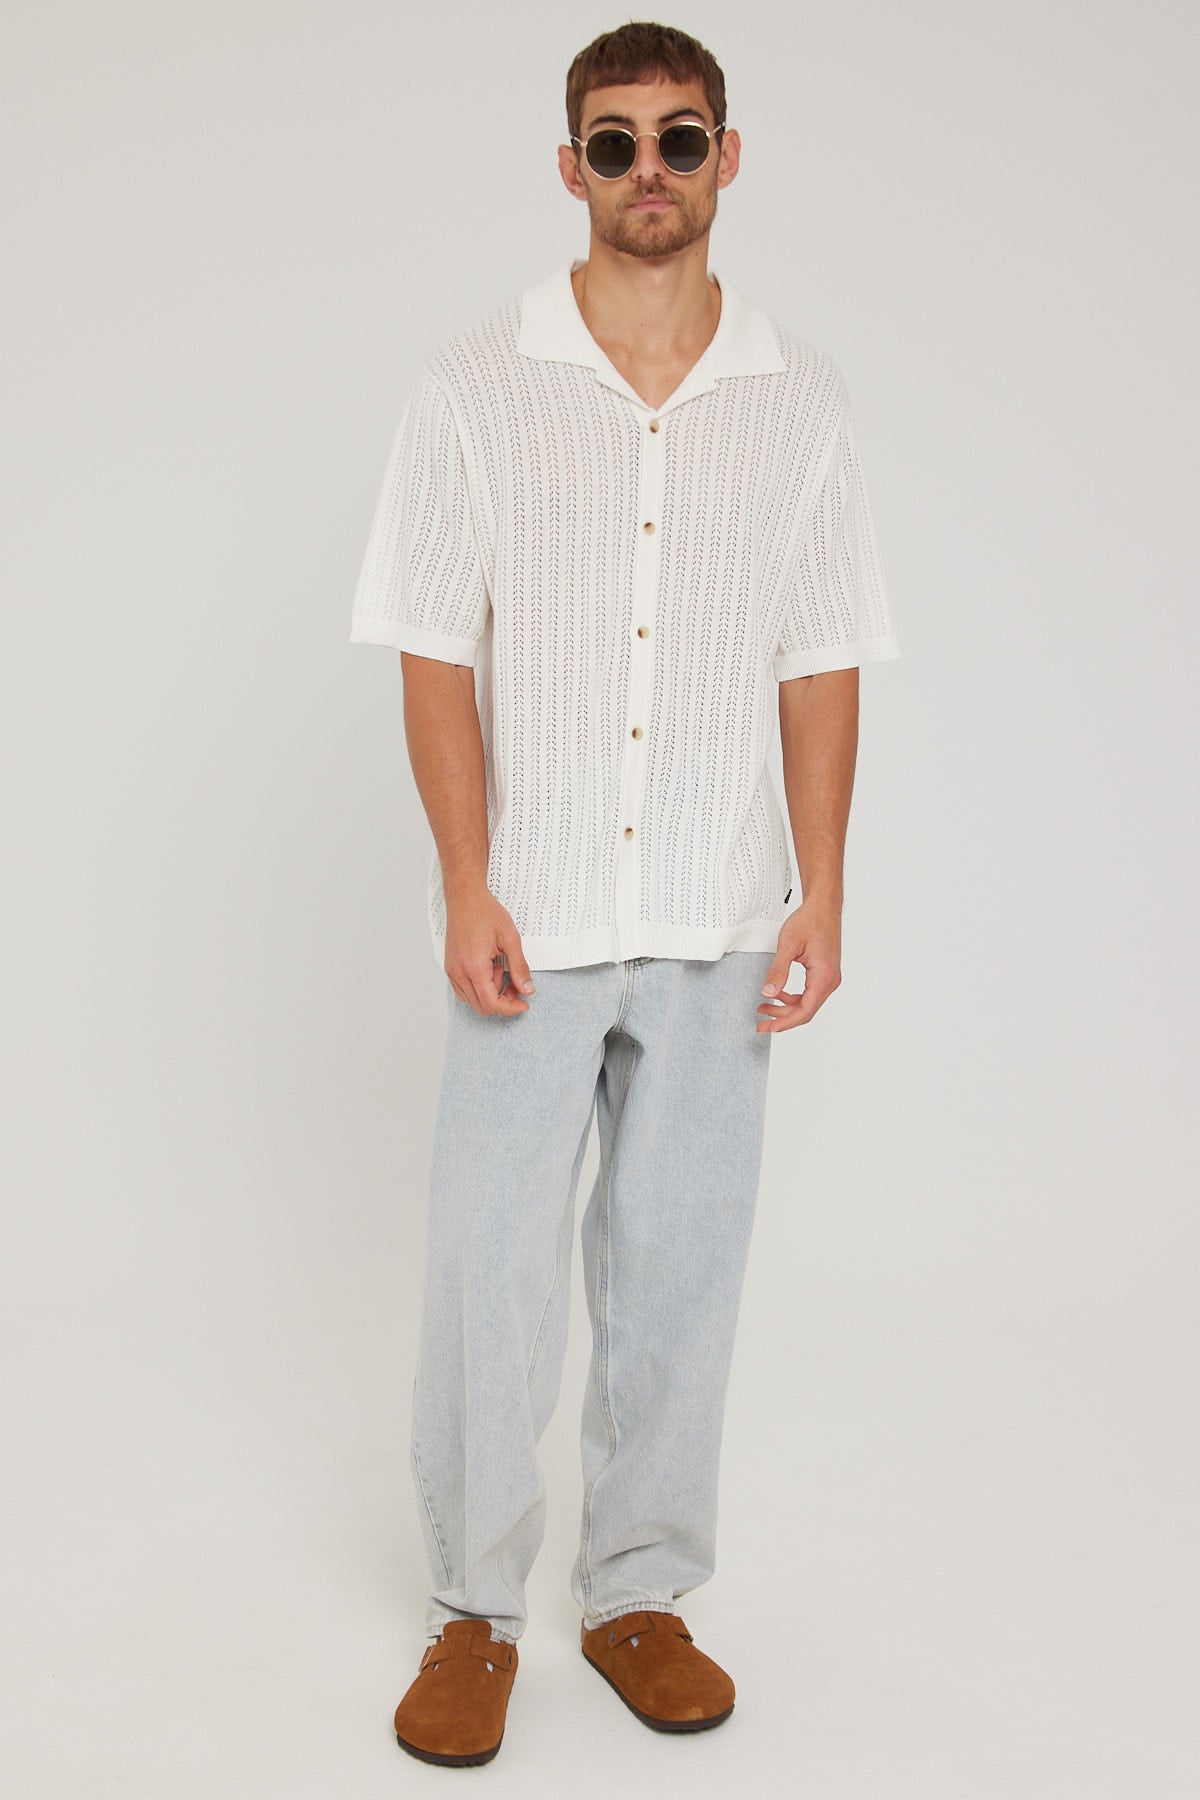 Rolla's Bowler Knit Shirt White – Universal Store